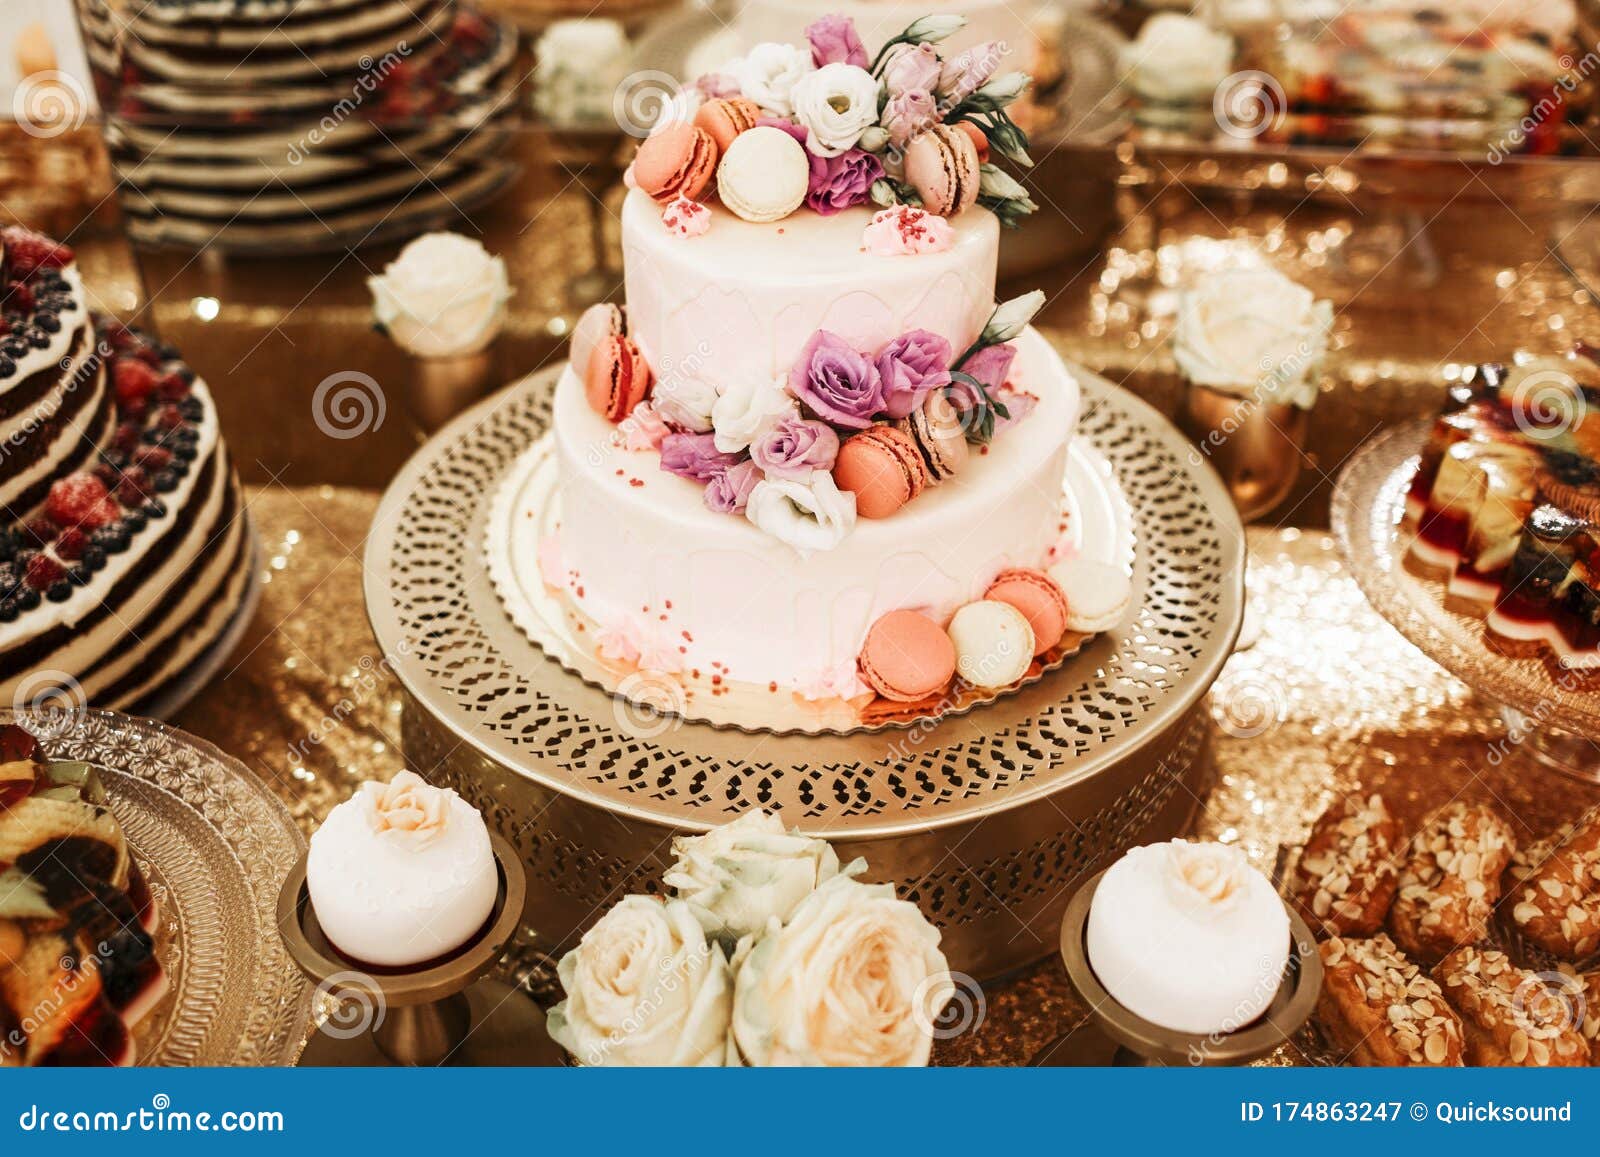 Elegant Floral Wedding Cake On A Stand Stock Image Image Of Confection Floral 174863247